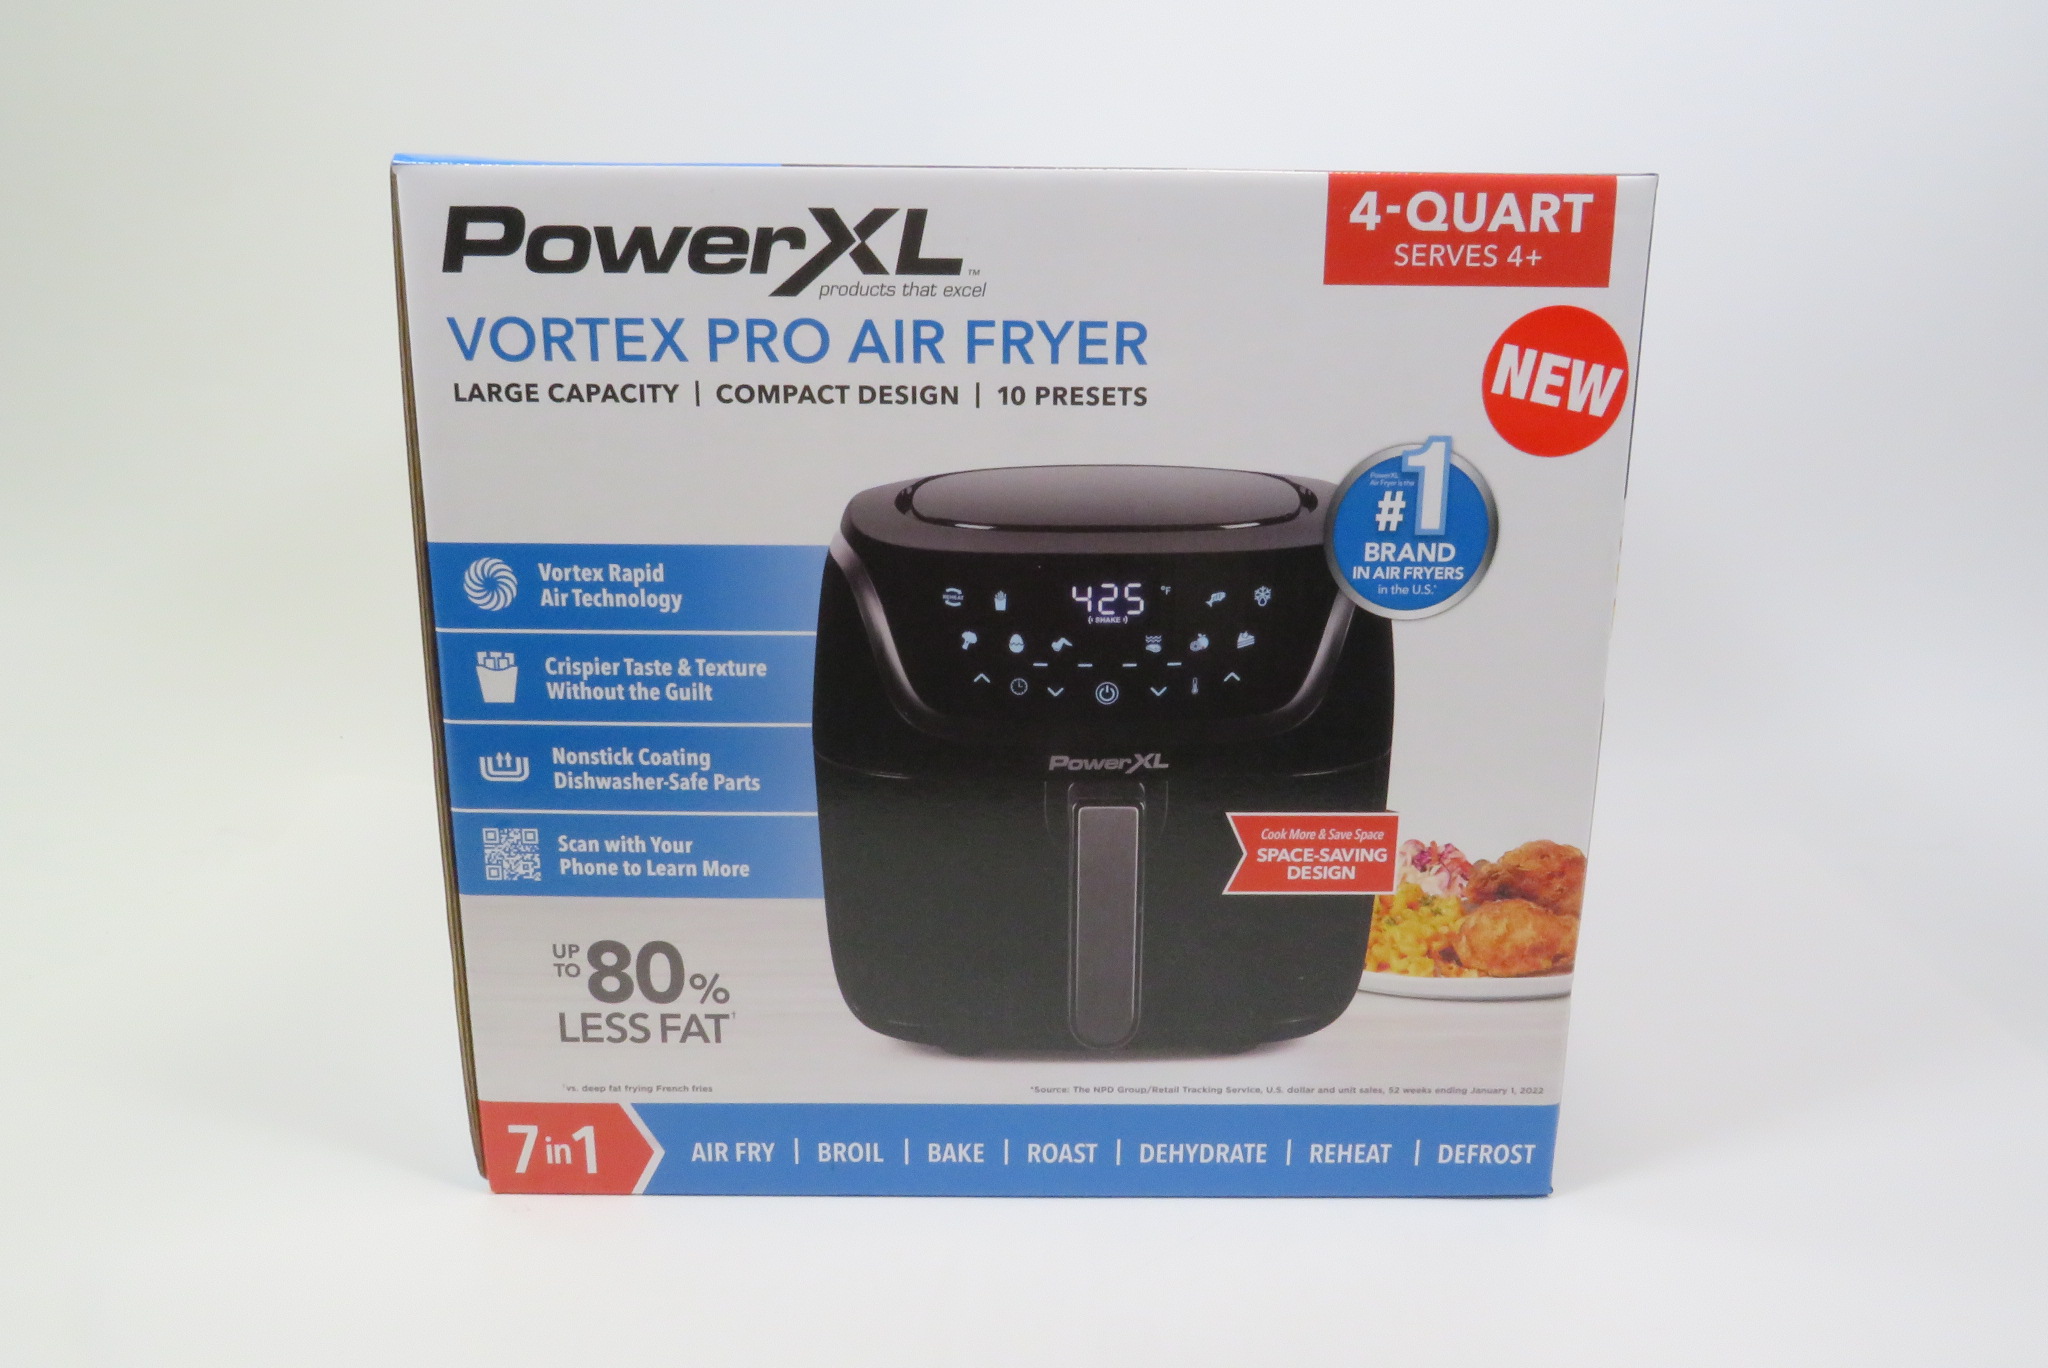 PowerXL Vortex Pro 8-Quart Smart Air Fryer